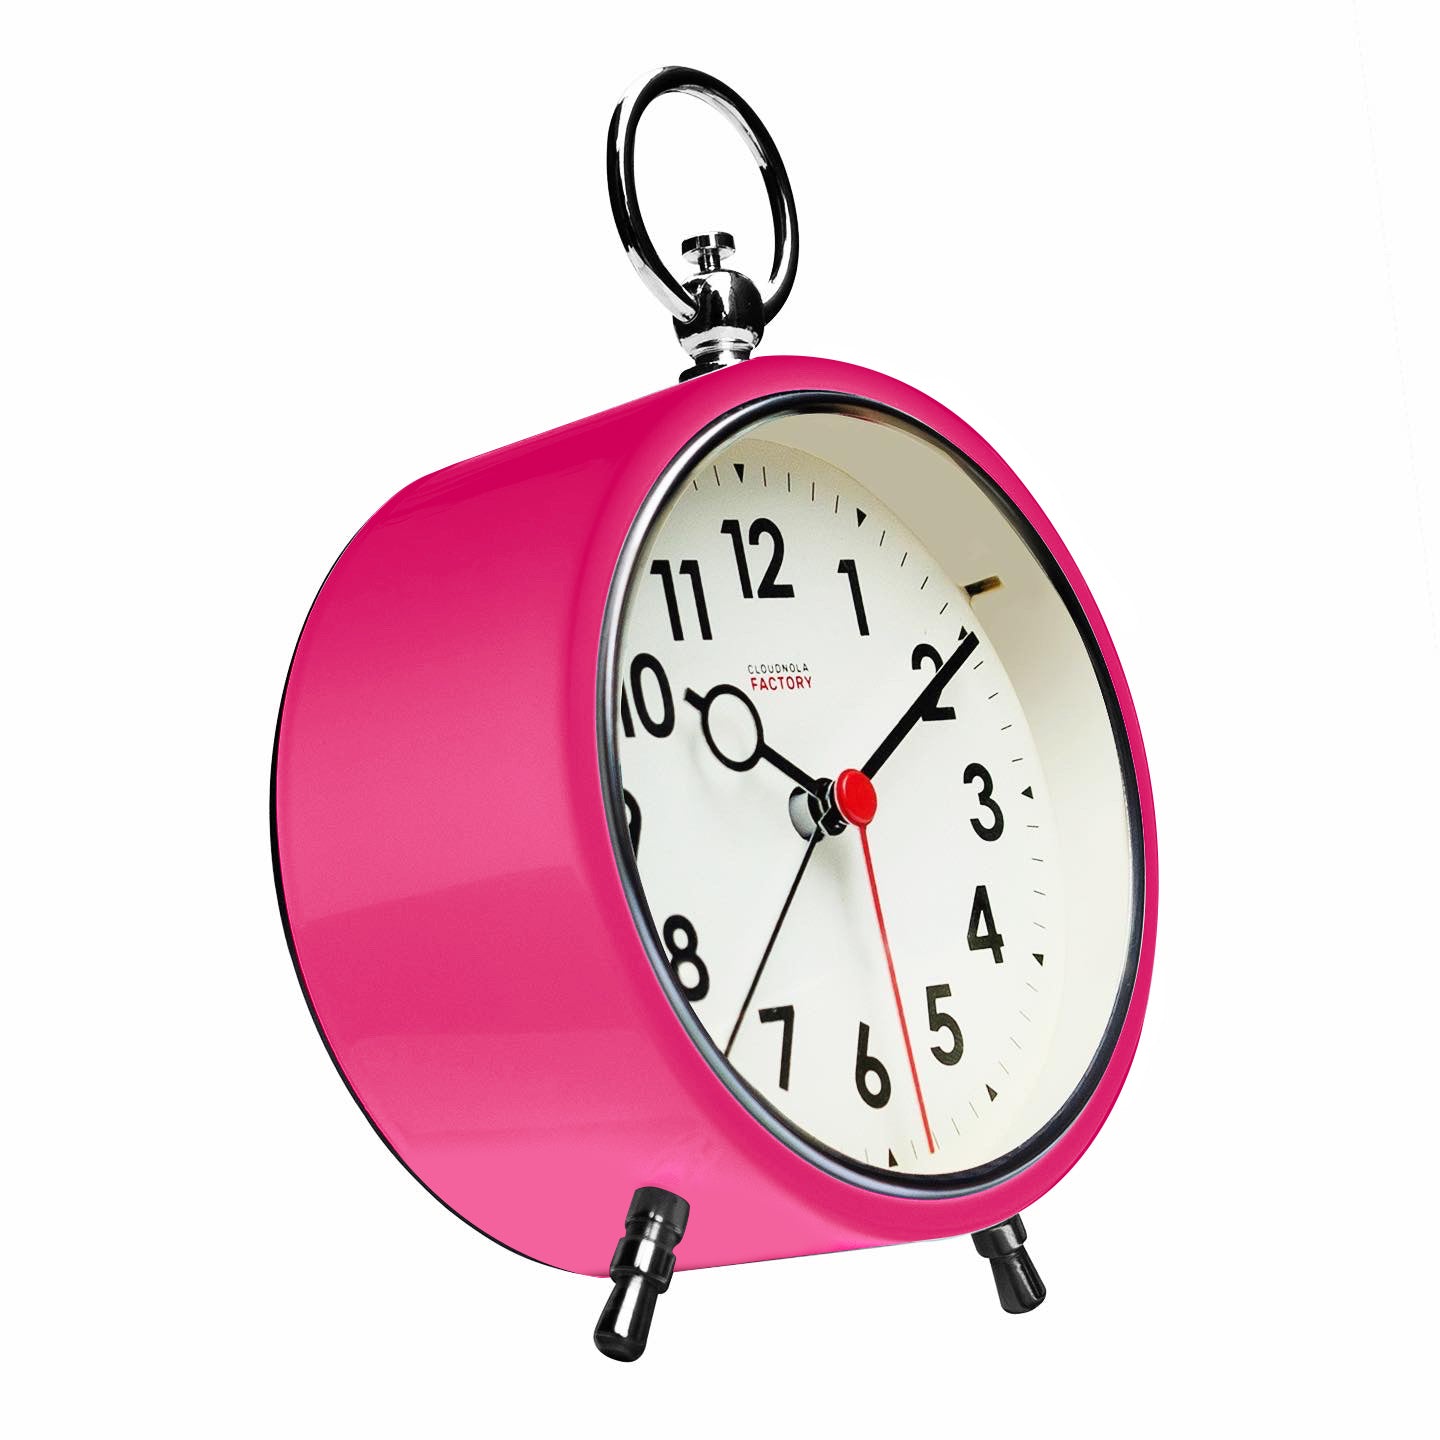 Factory Alarm Pink - Alarm Clock - Silent Mechanism - Snooze - LED